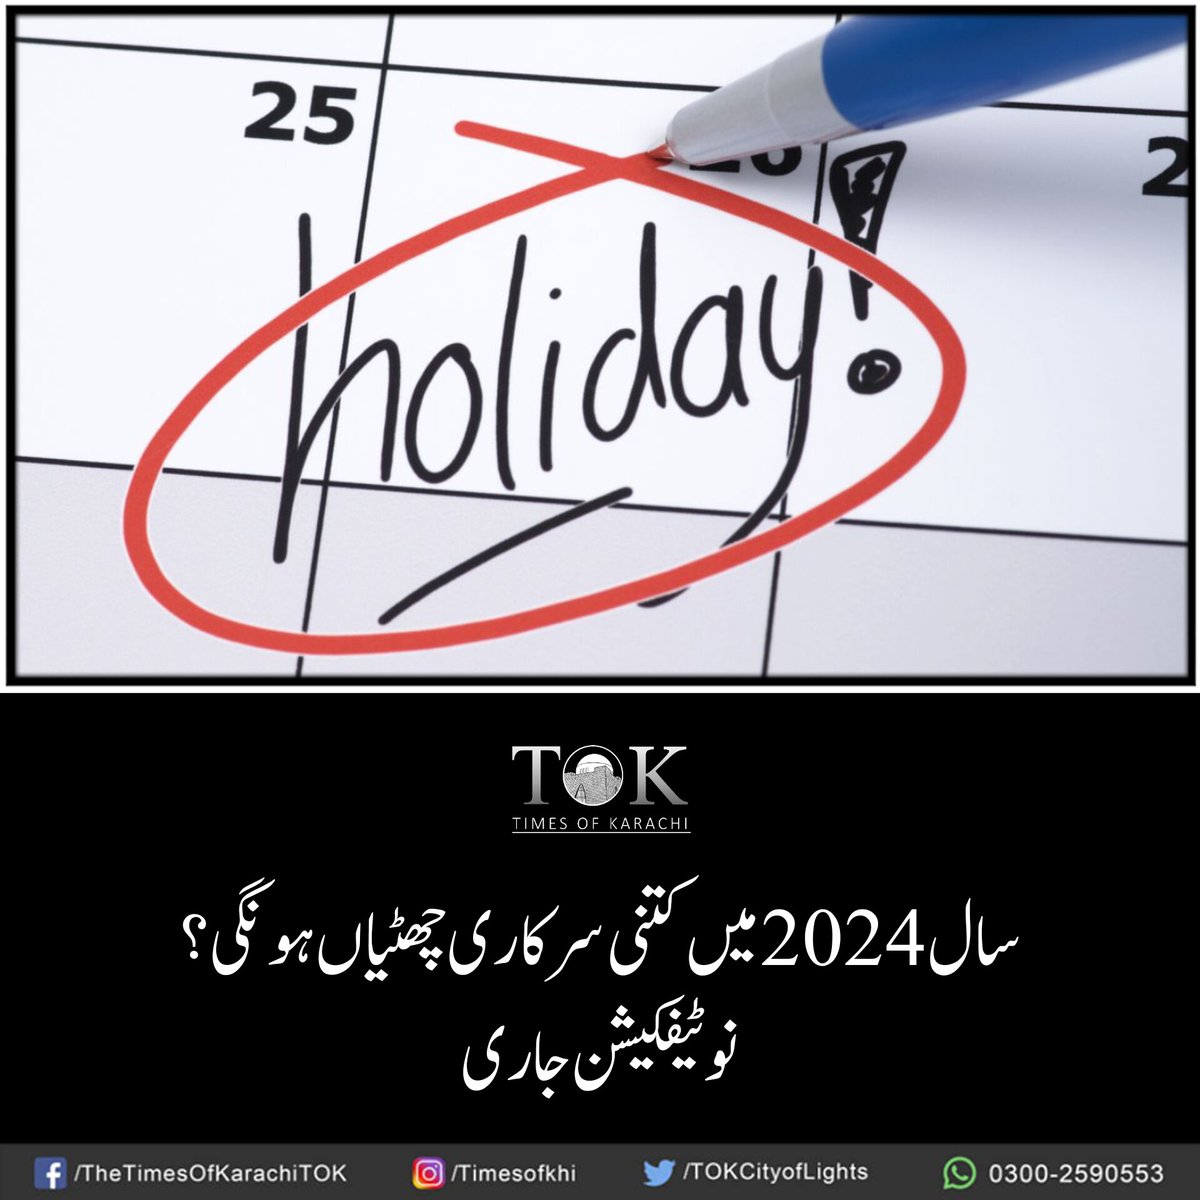 تفصیلات: bitly.ws/36KM3

#holidays2024 #Pakistan #TOKAlert